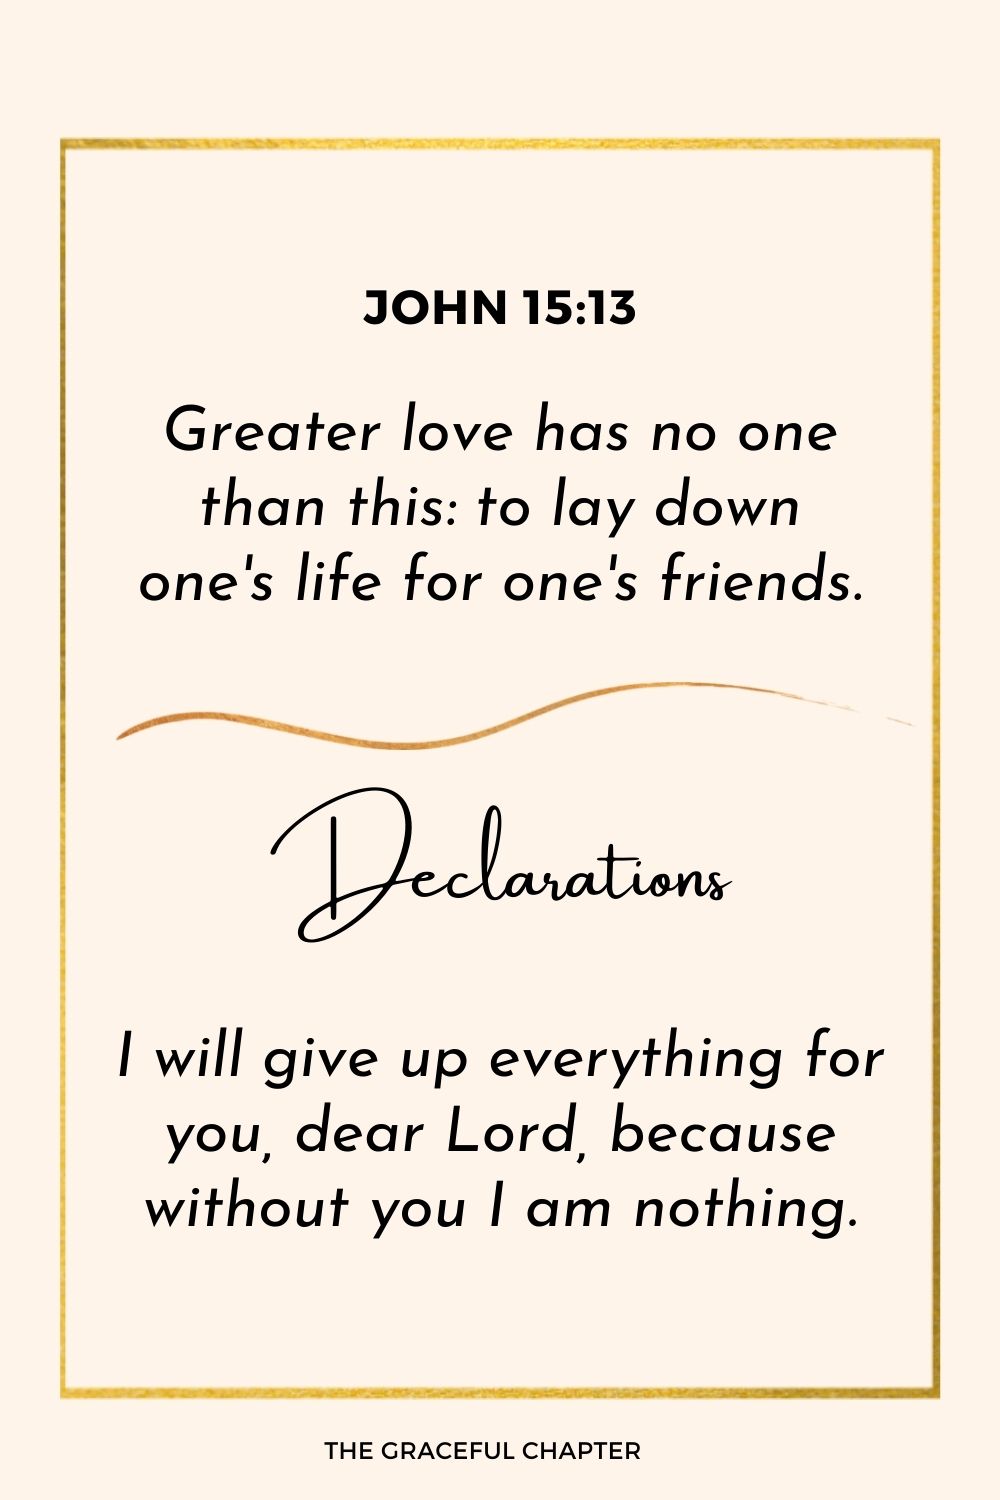 Declaration - John 15:13